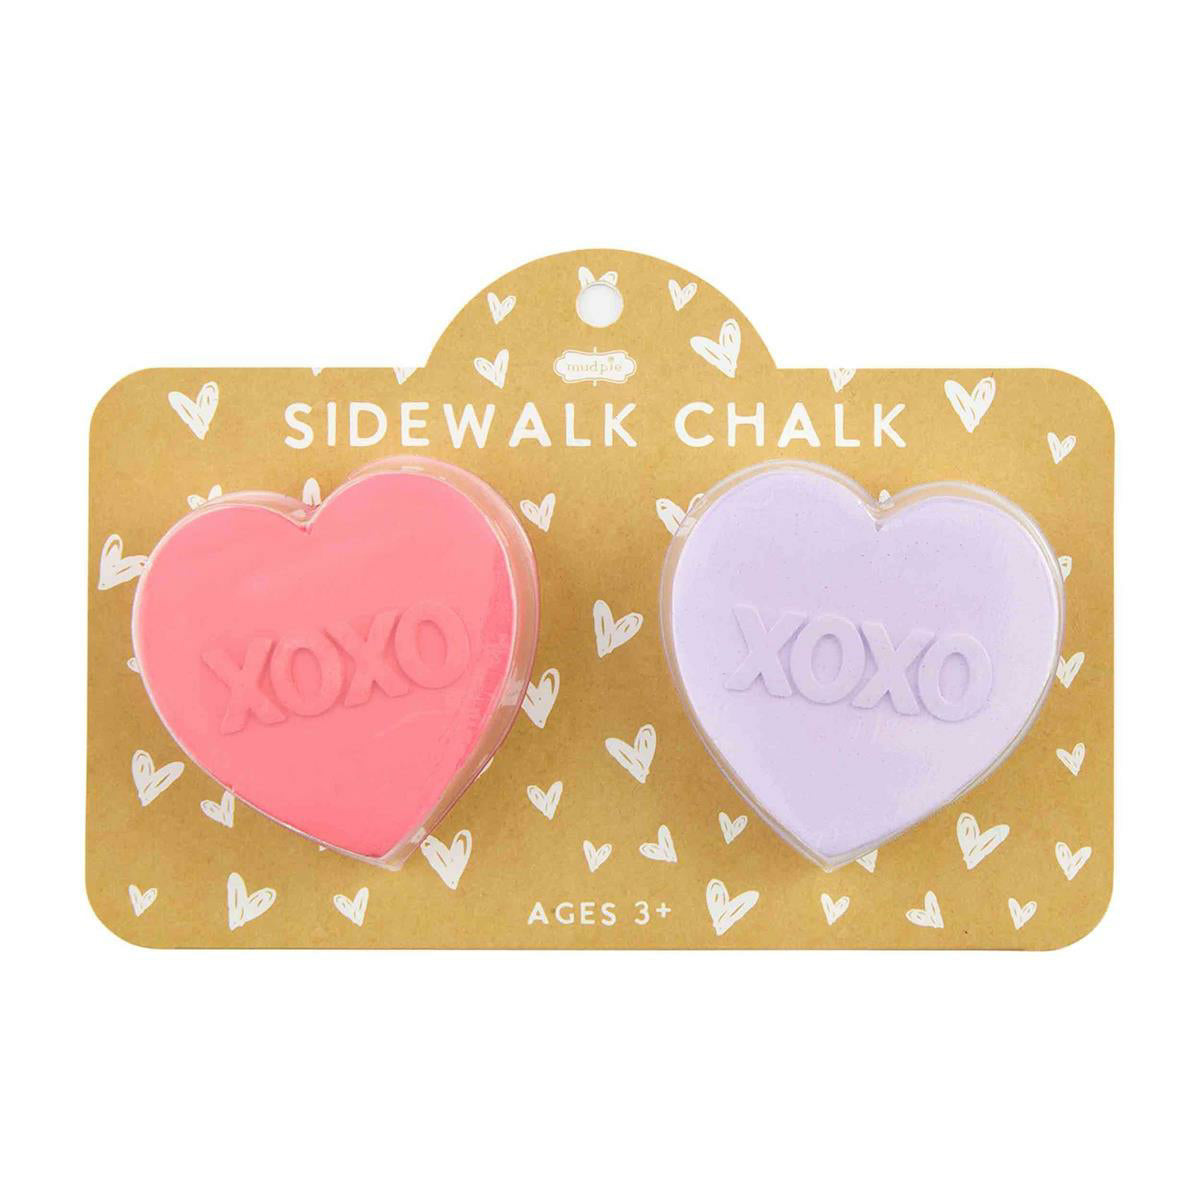 XOXO Heart Shaped Valentines Day Chalk Set